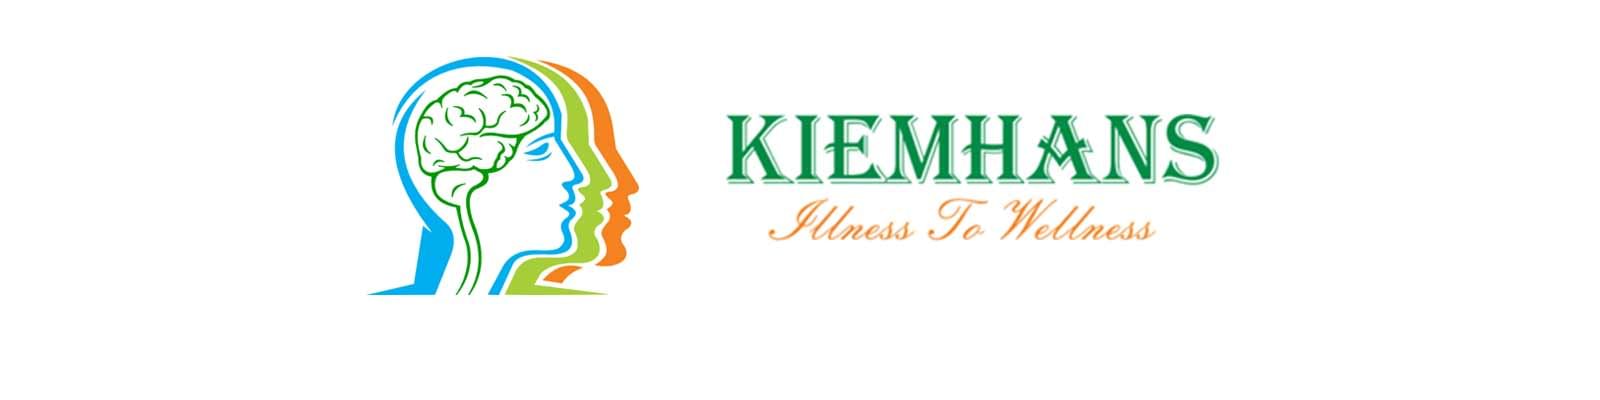 Kiran Institute Of Ent Mental Health & Neurosciences(kiemhans)